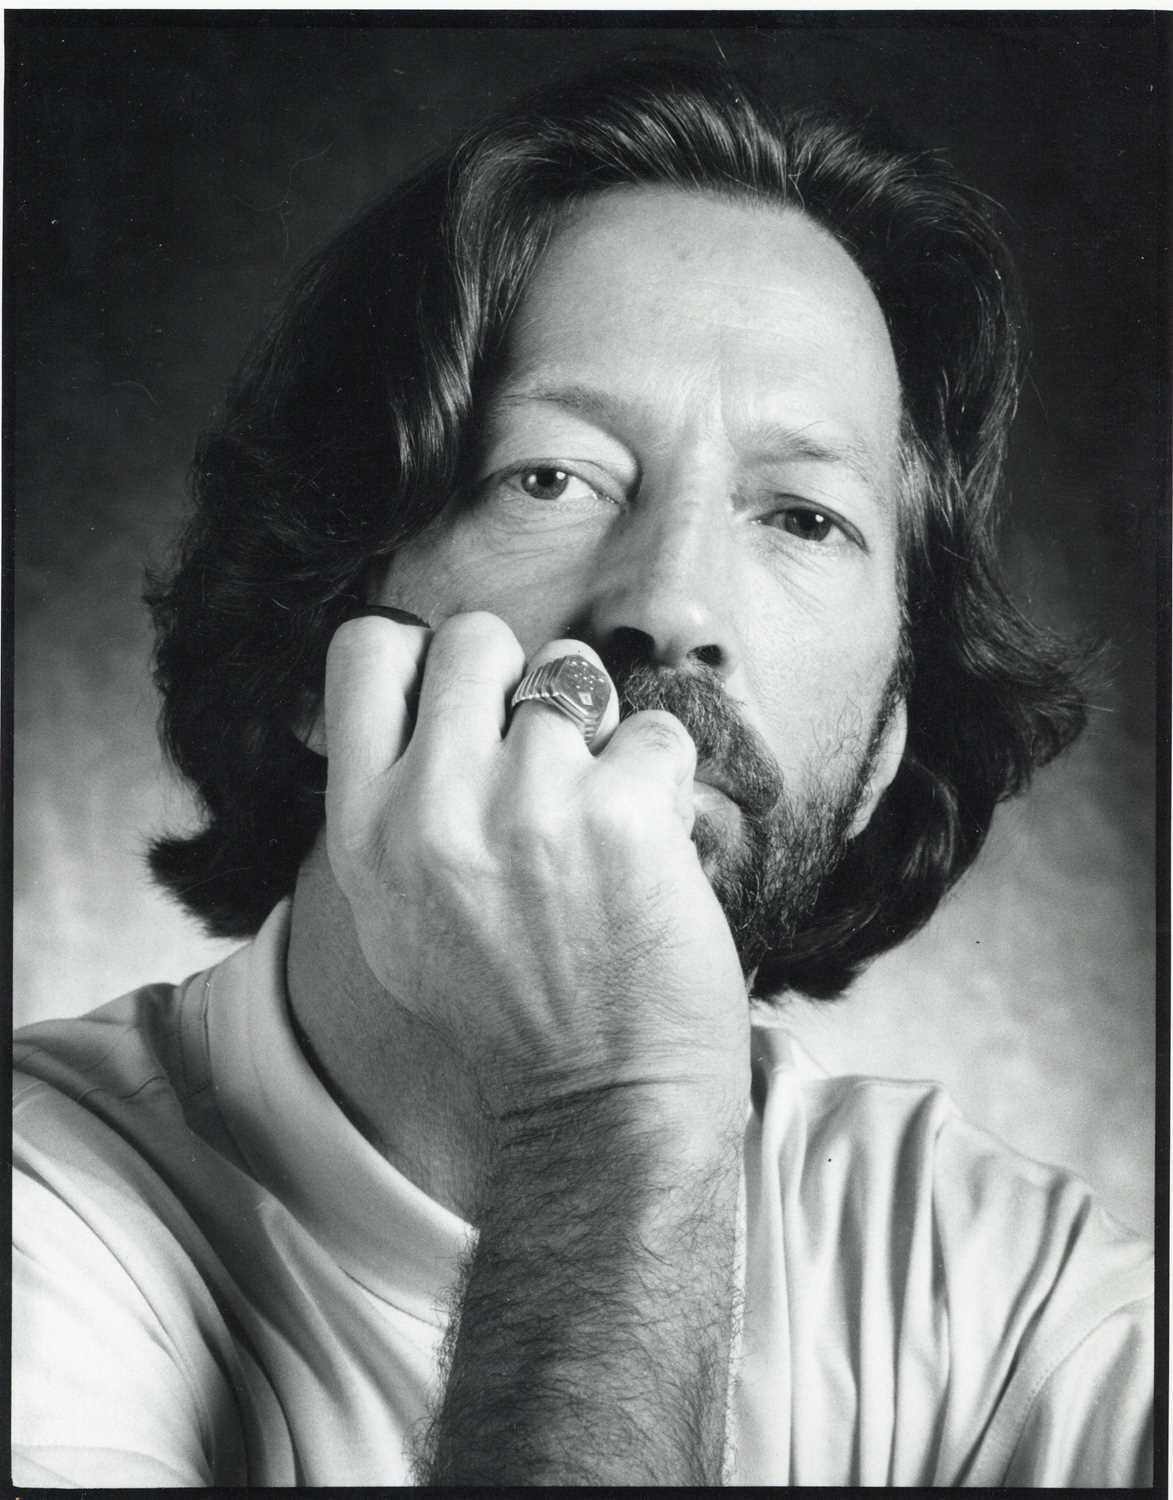 Lot 50 - LUCIANO VITI, Eric Clapton